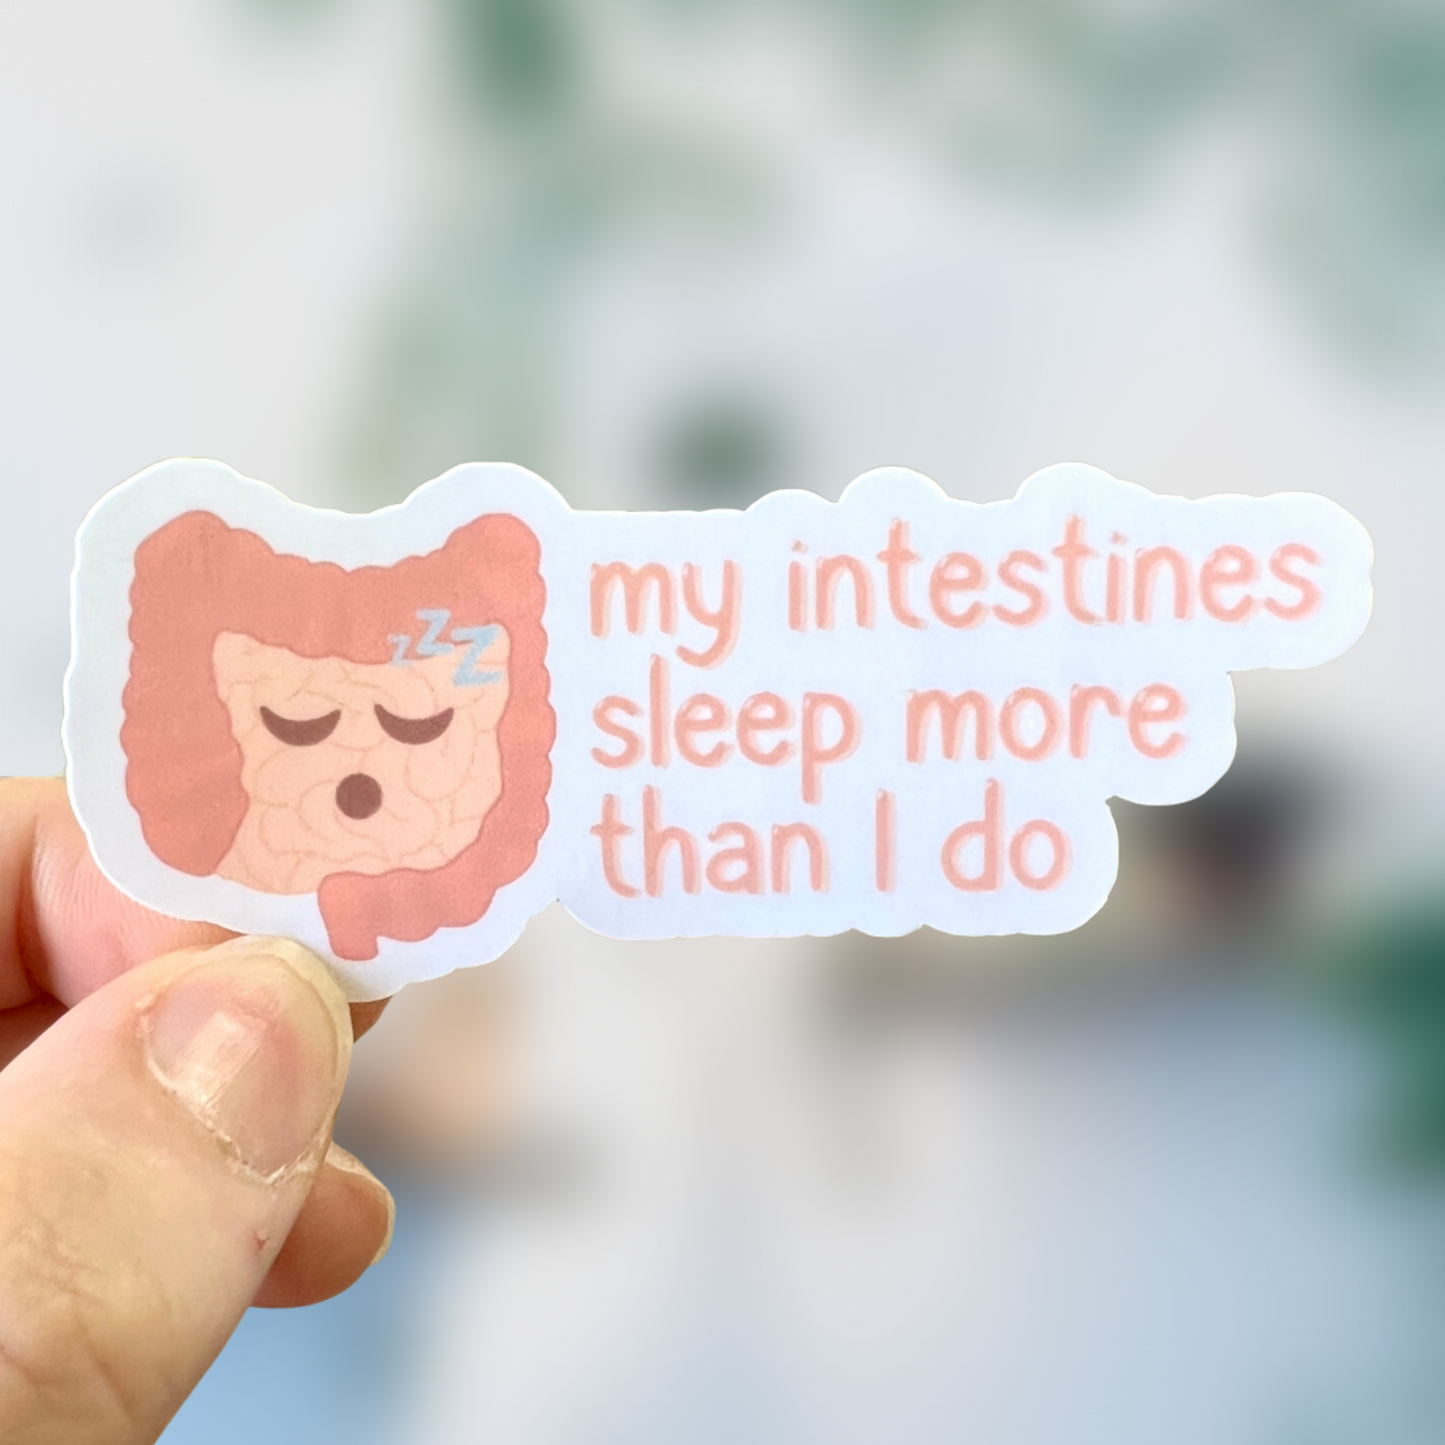 My Stomach/Intestines/Colon Sleeps More Than I Do Sticker